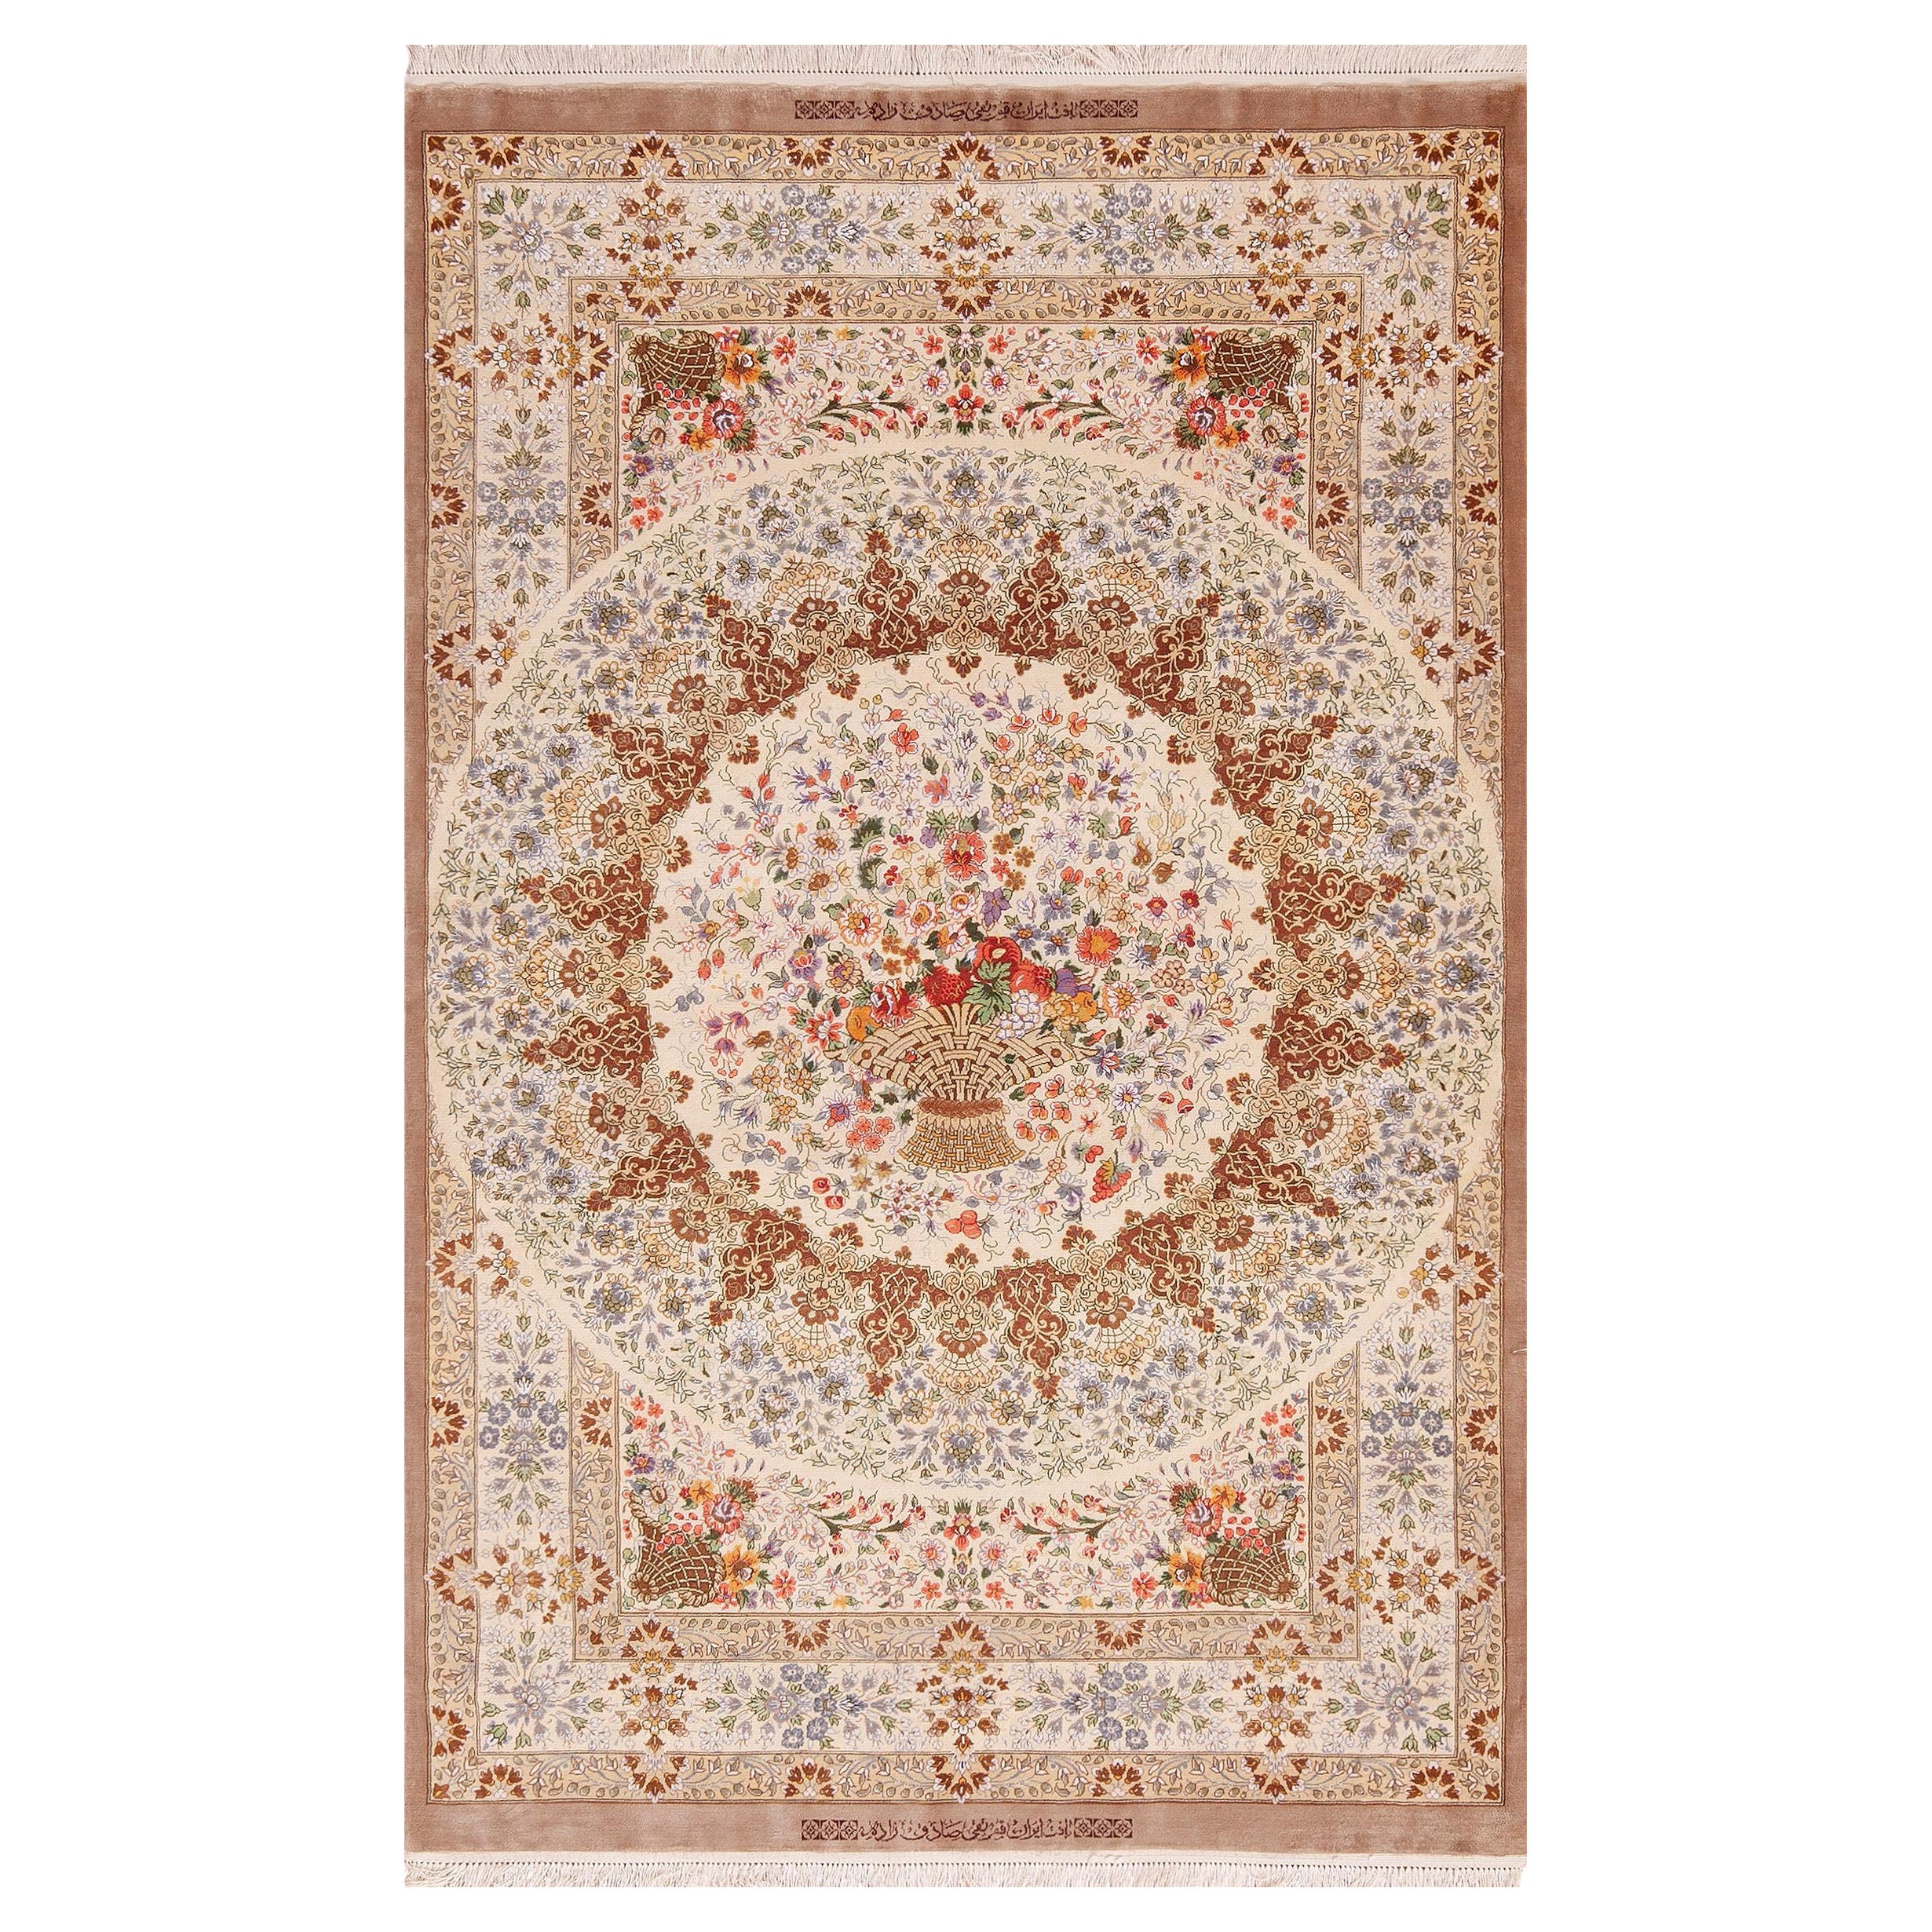 Luxurious Fine Weave Artistic Floral Vintage Persian Silk Qum Rug 3'5" x 5'4"